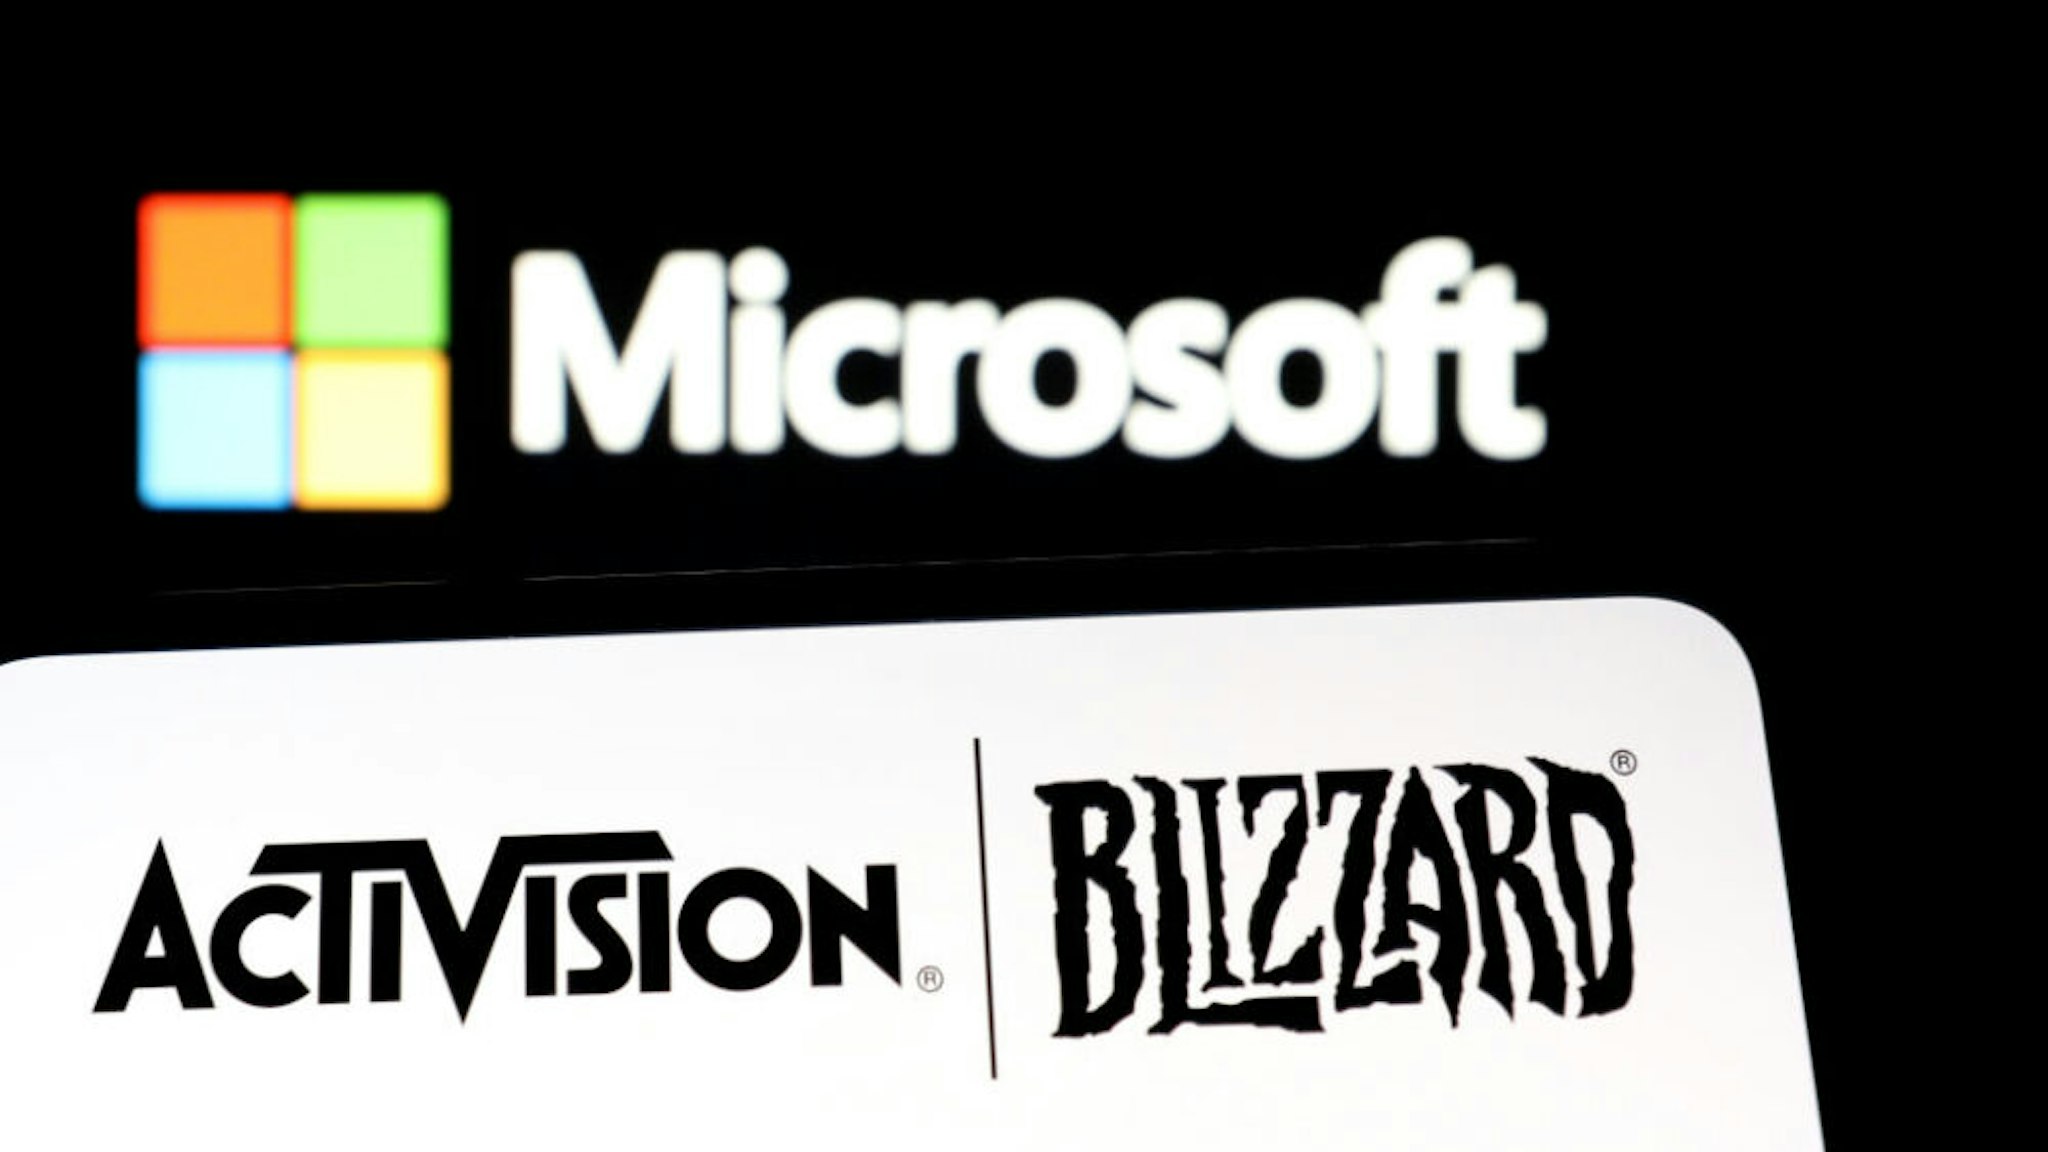 ANKARA, TURKIYE - JANUARY 18: In this photo illustration, the logos of Microsoft and Activision Blizzard are displayed in Ankara, Turkiye on January 18, 2022.